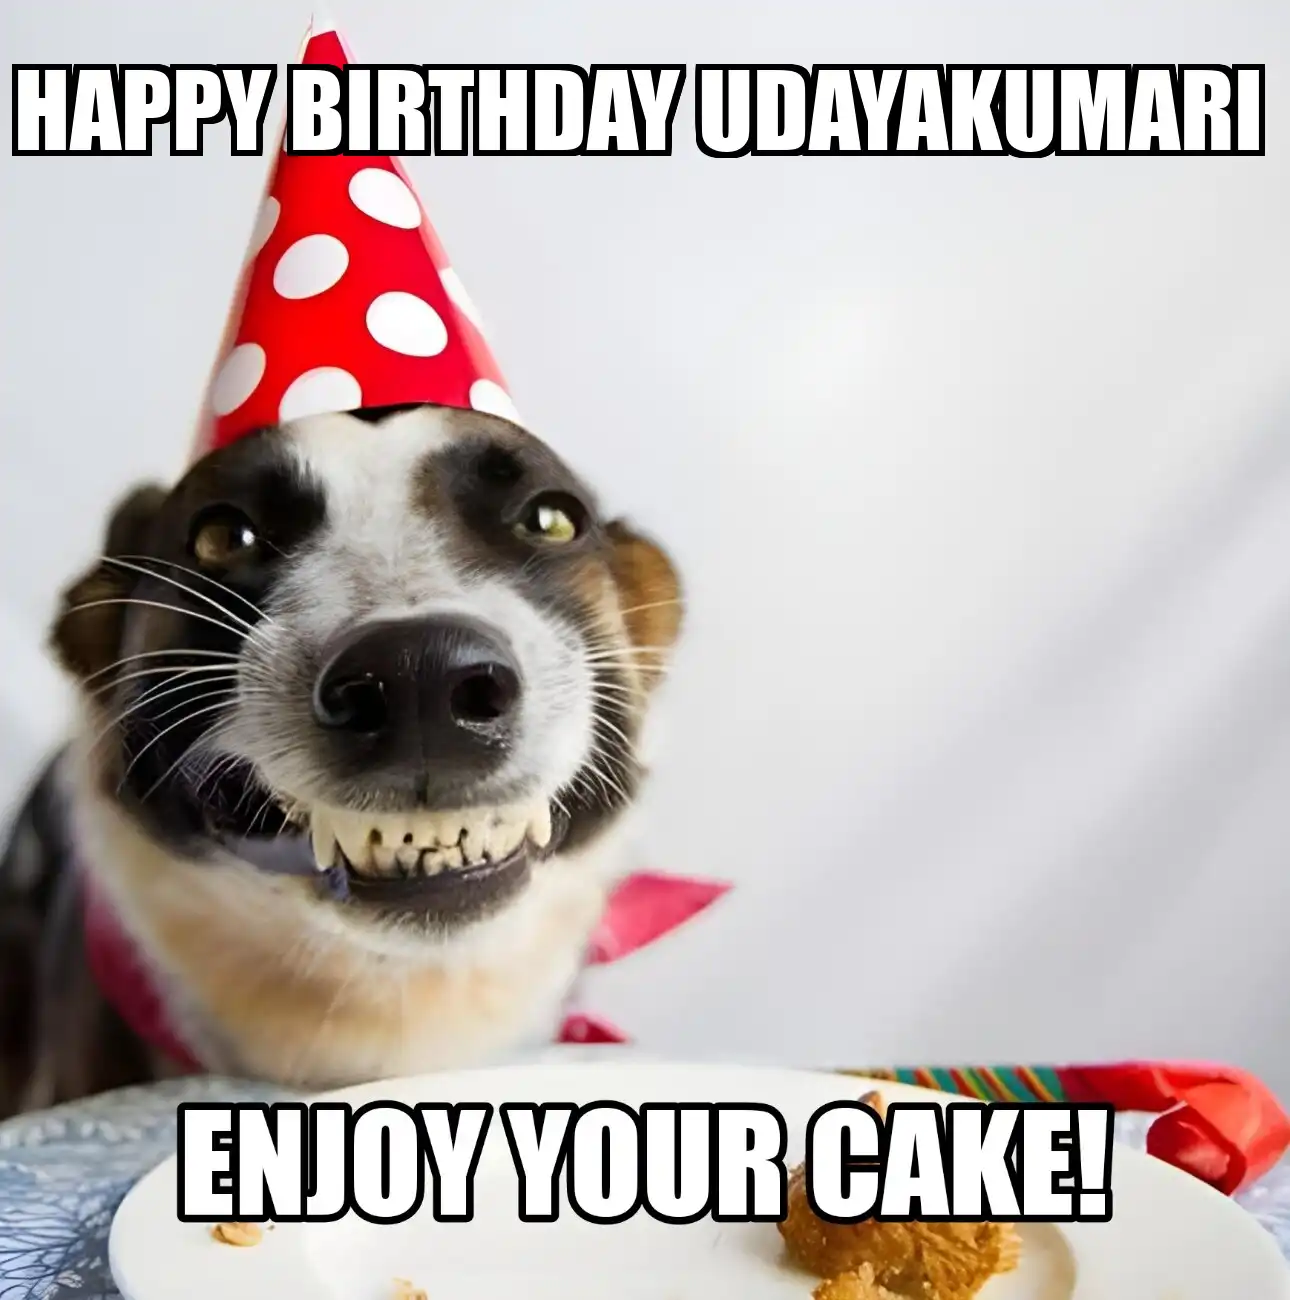 Happy Birthday Udayakumari Enjoy Your Cake Dog Meme